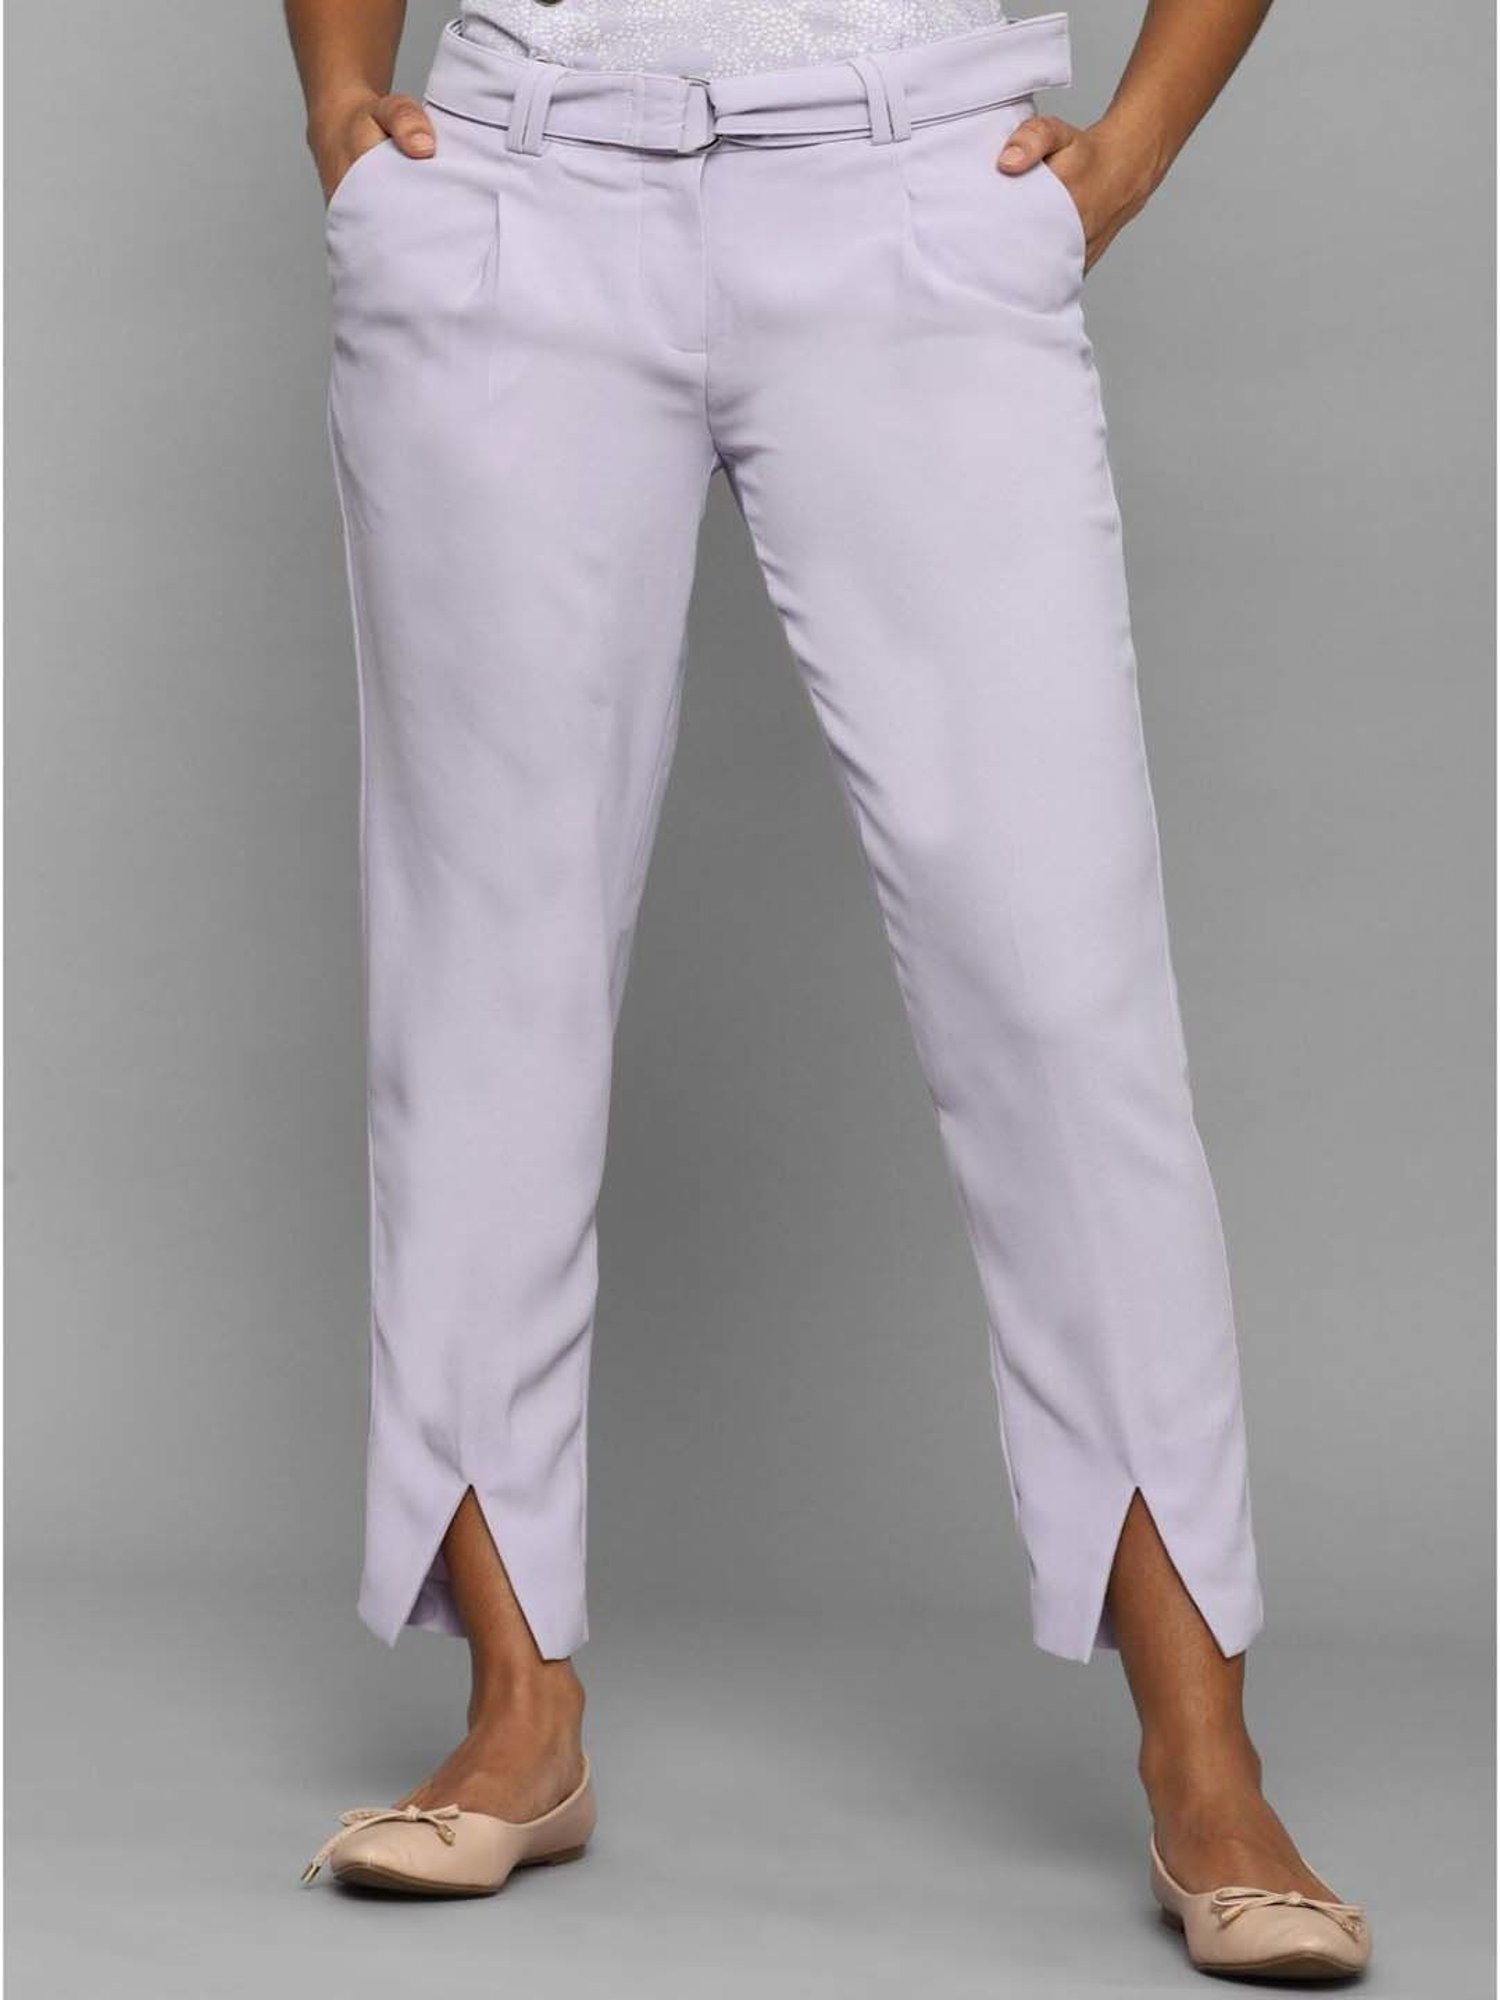 Buy Men Black Slim Fit Solid Casual Trousers Online - 738405 | Allen Solly